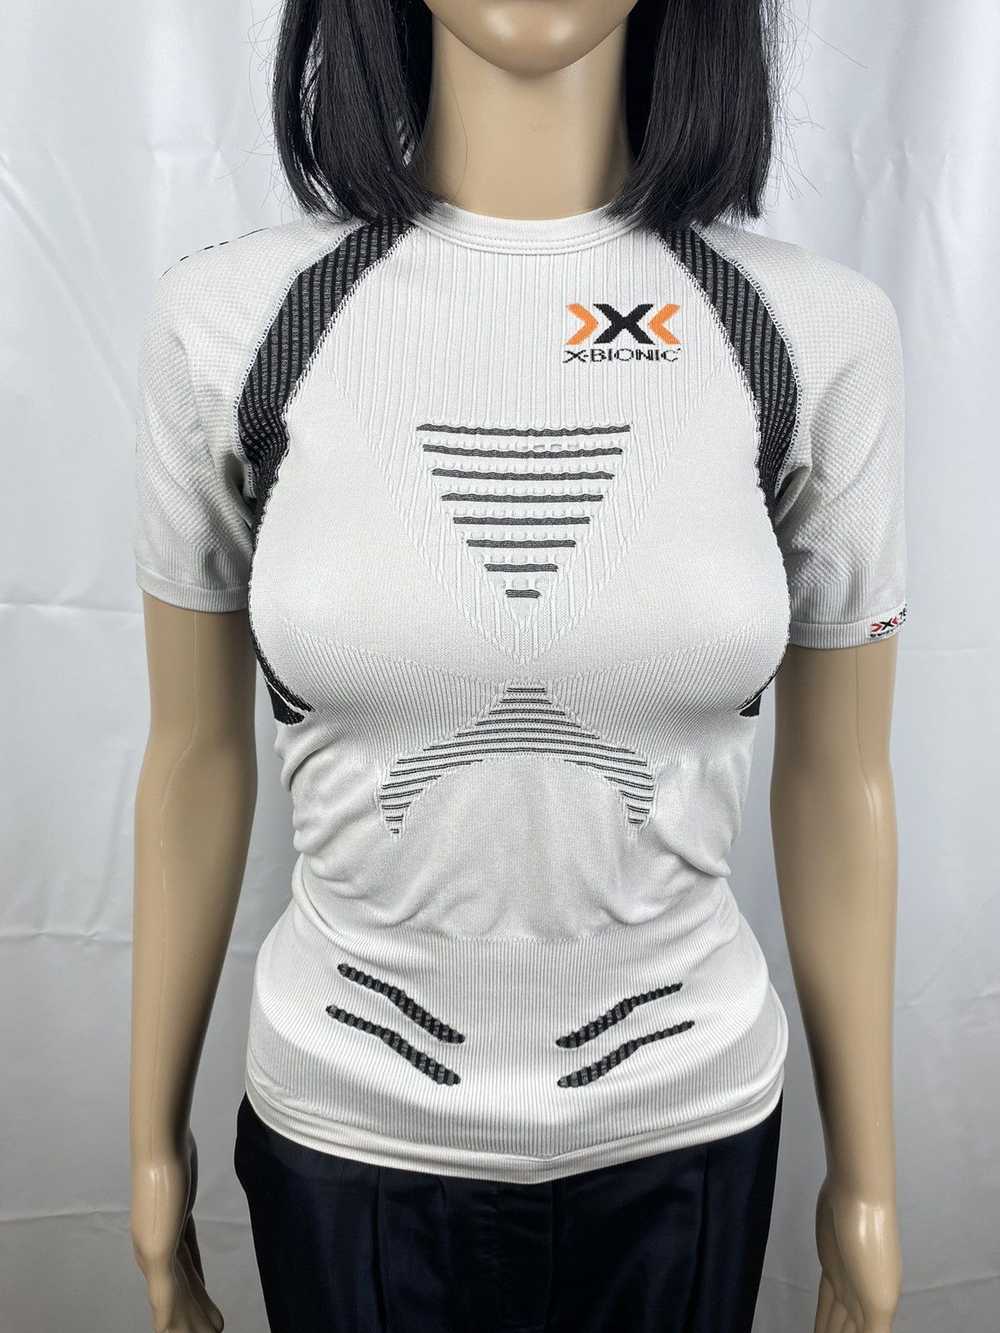 Designer X-Bionic The Trick Short Sleeve Tee Shir… - image 2